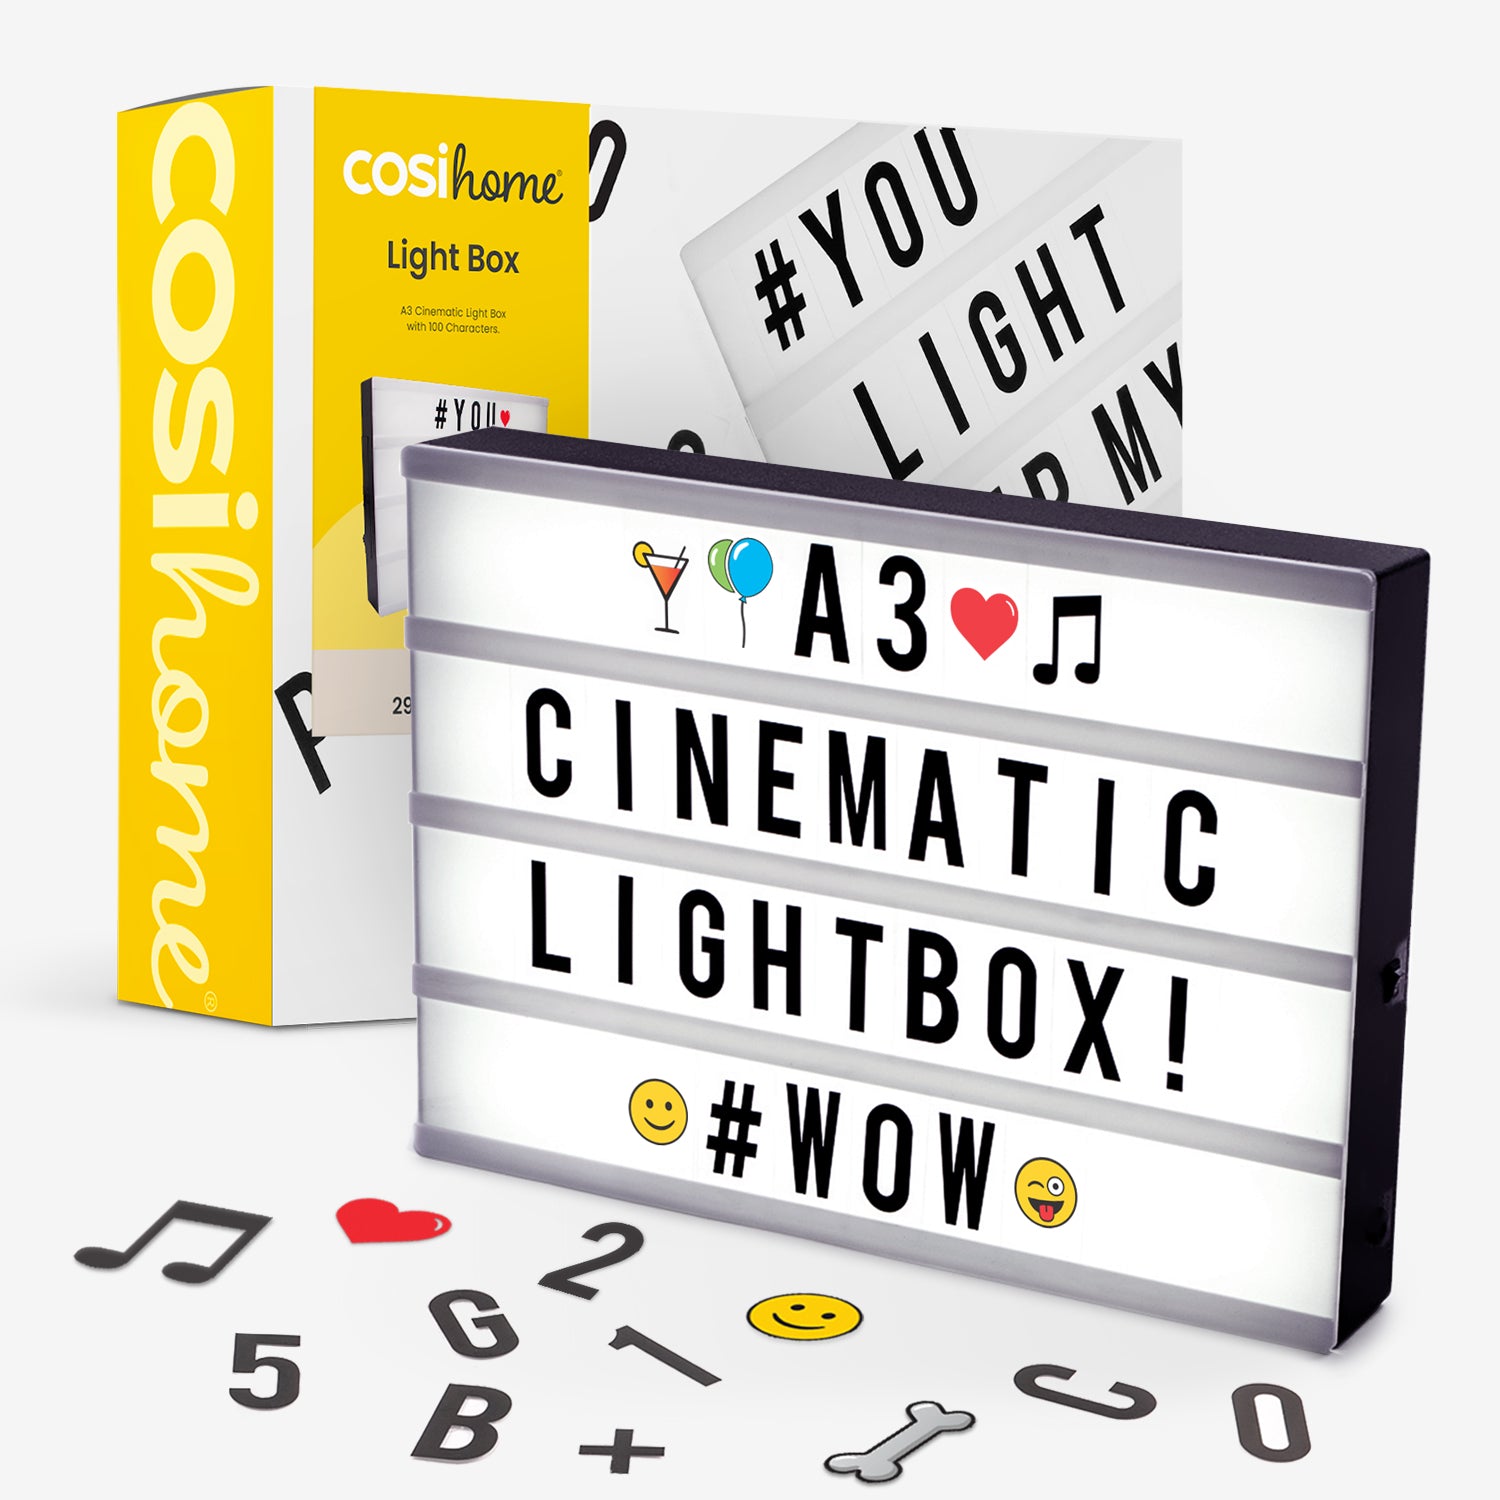 A4 Size Lightbox Letters LED Combination Cinema Light Box USB Port